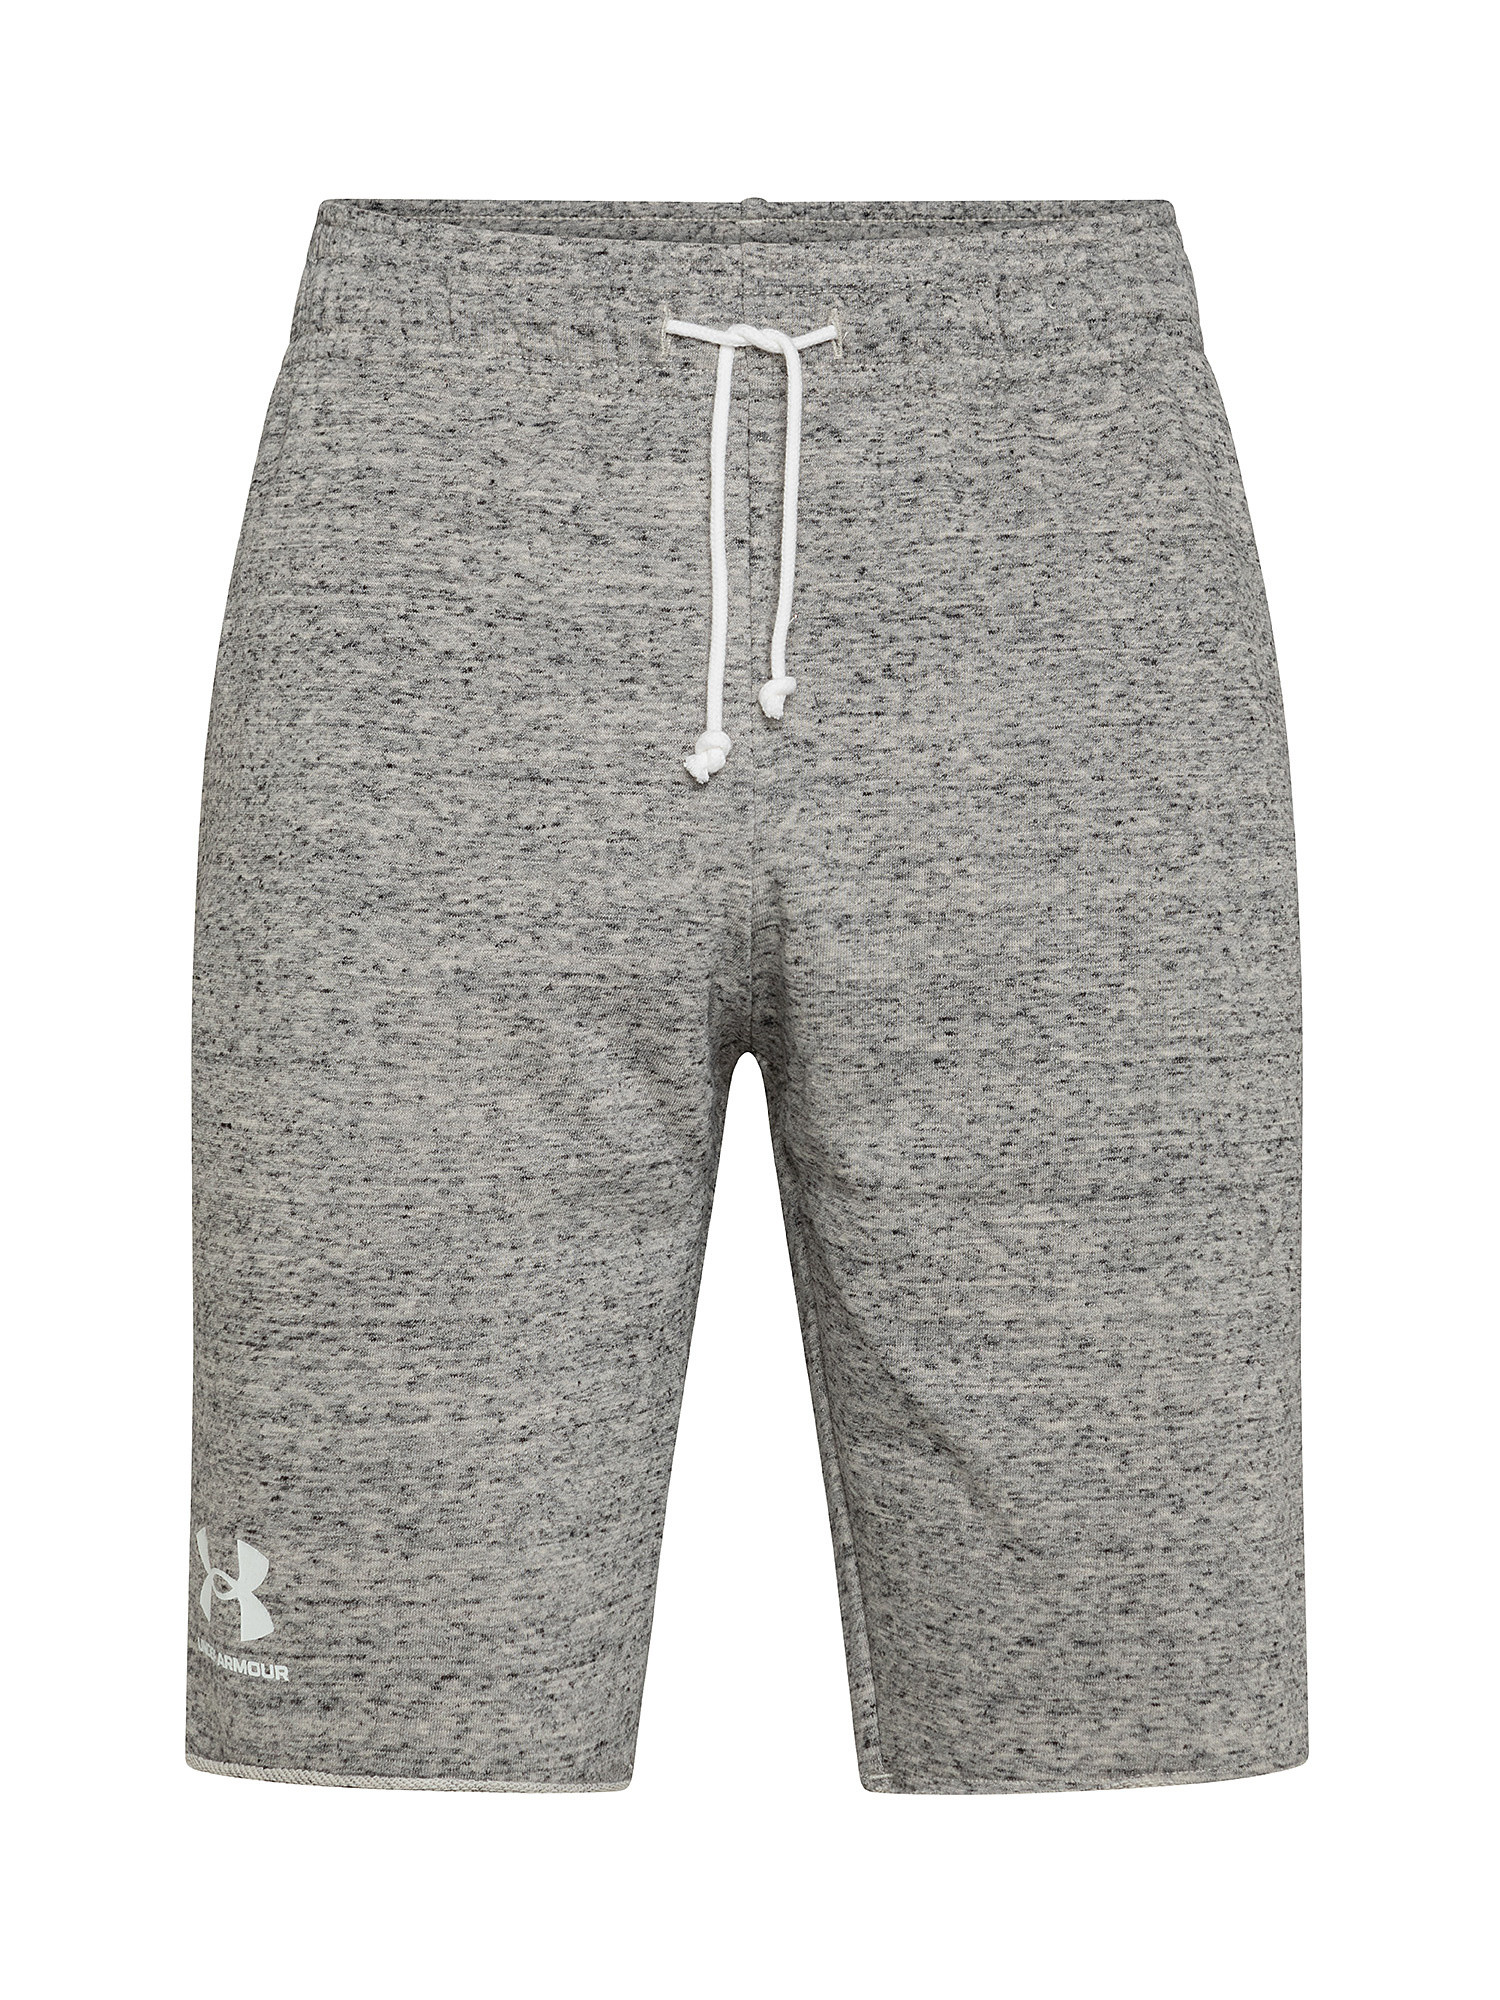 Shorts UA Terrain Woven, Grey, large image number 0